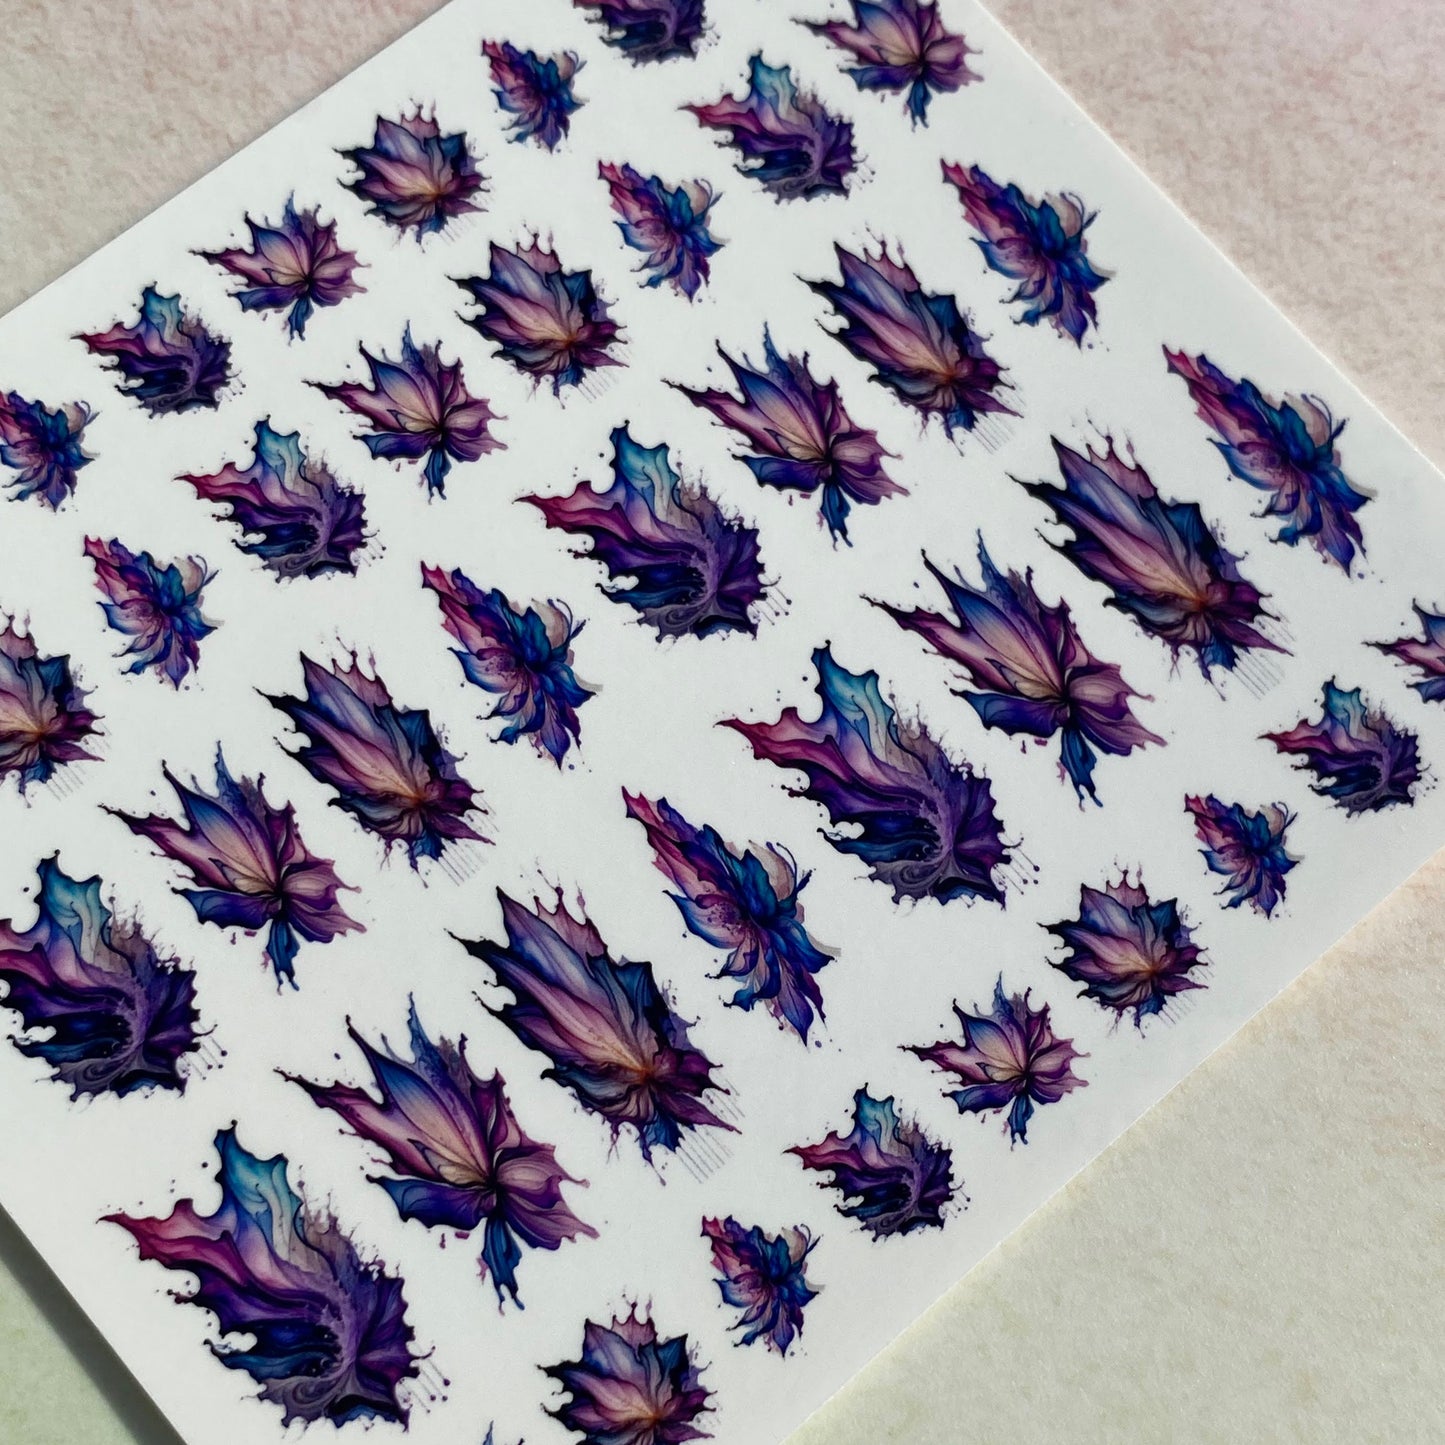 Floral Alcohol Ink Nail Art - Lavender Waves